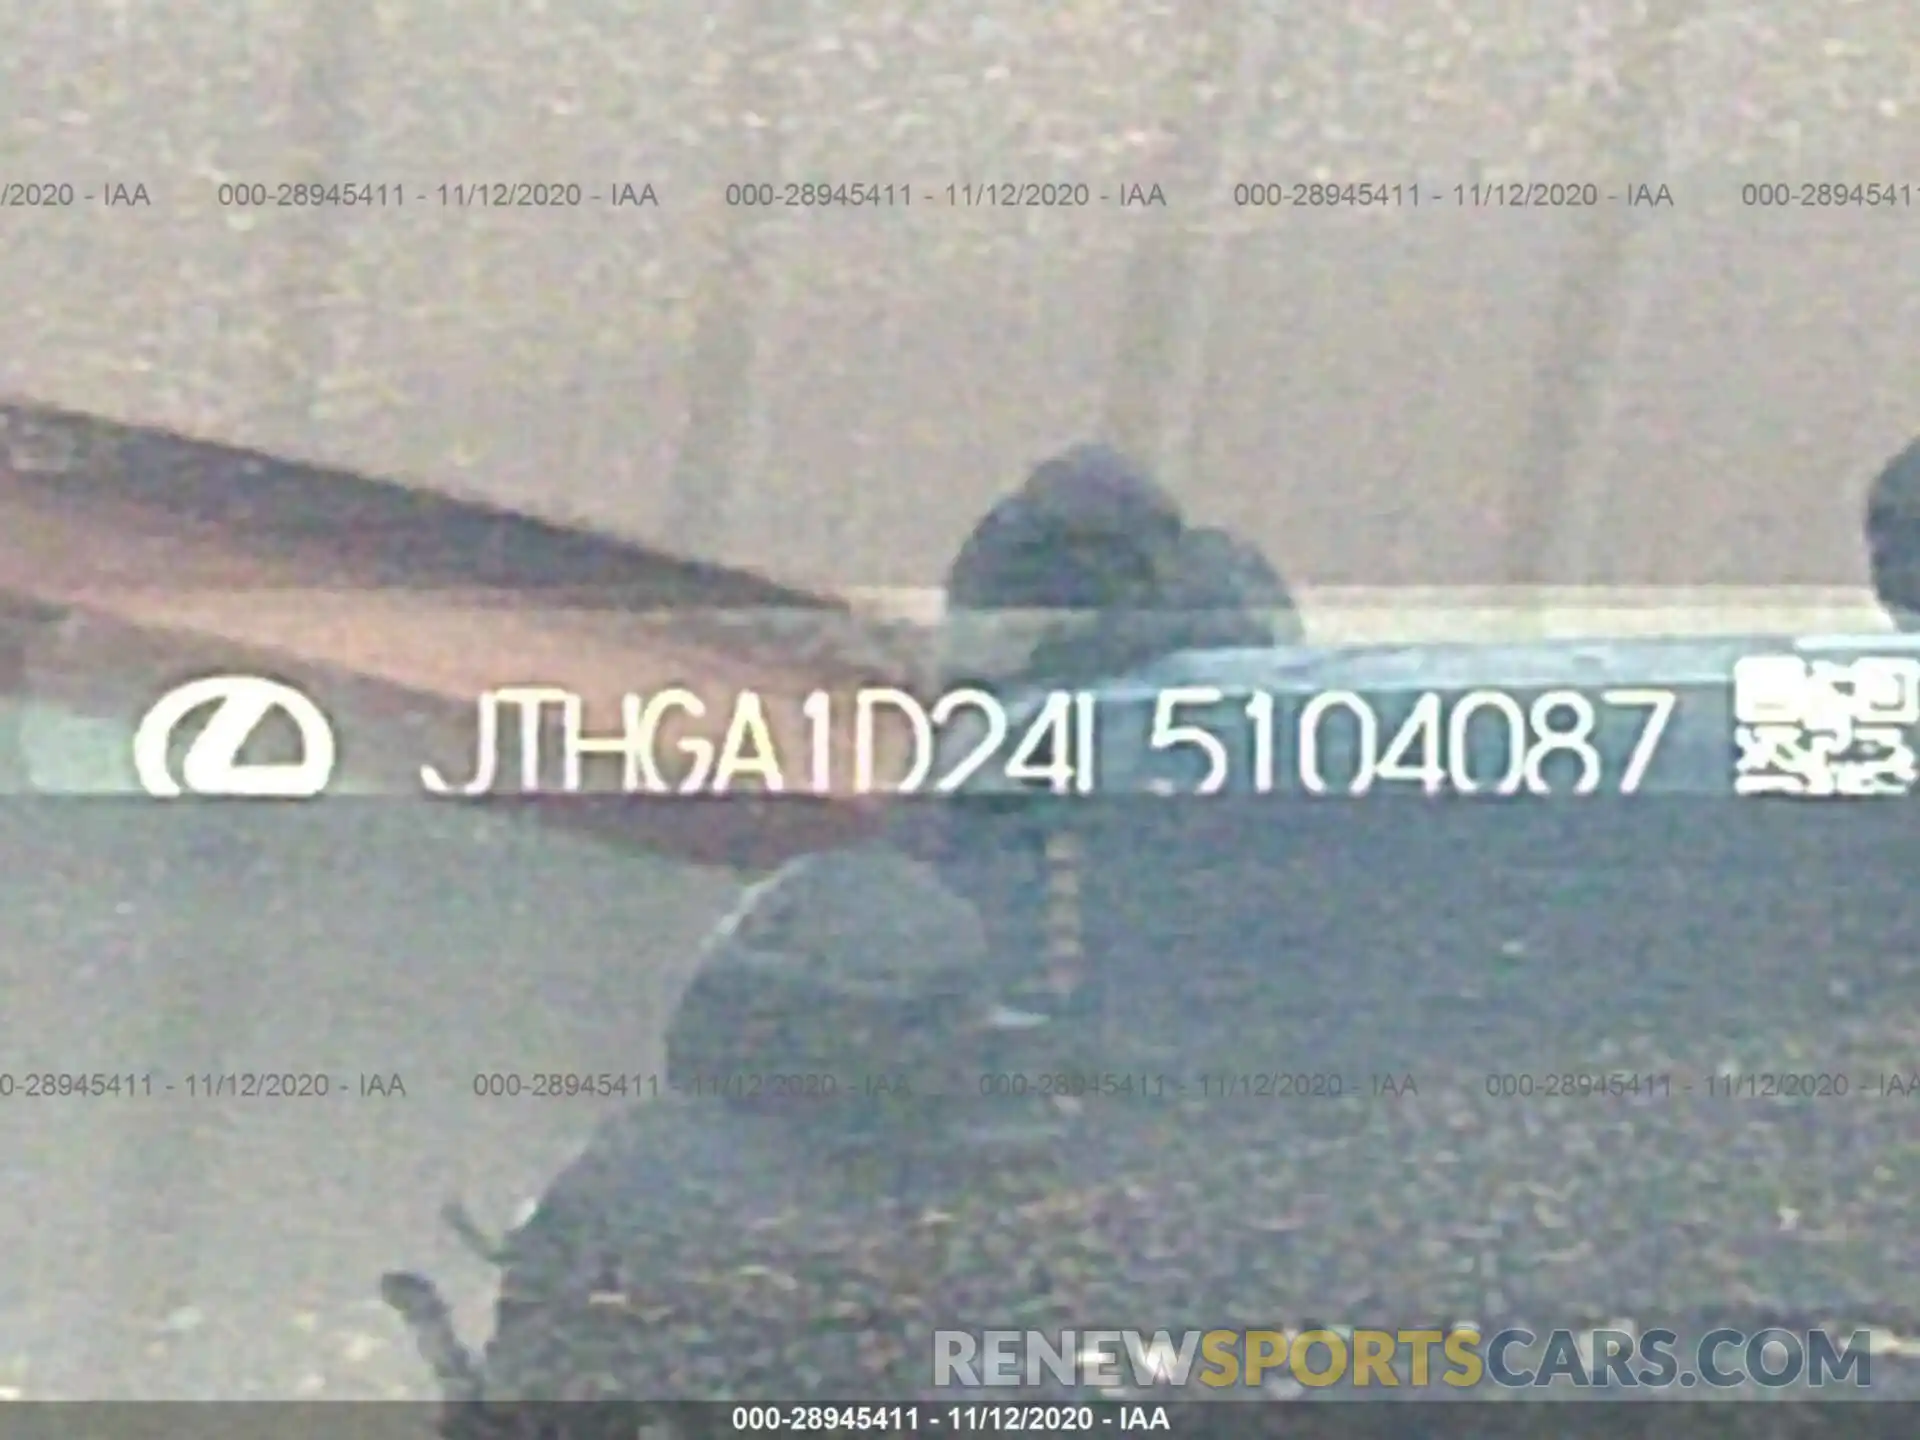 9 Photograph of a damaged car JTHGA1D24L5104087 LEXUS IS 2020